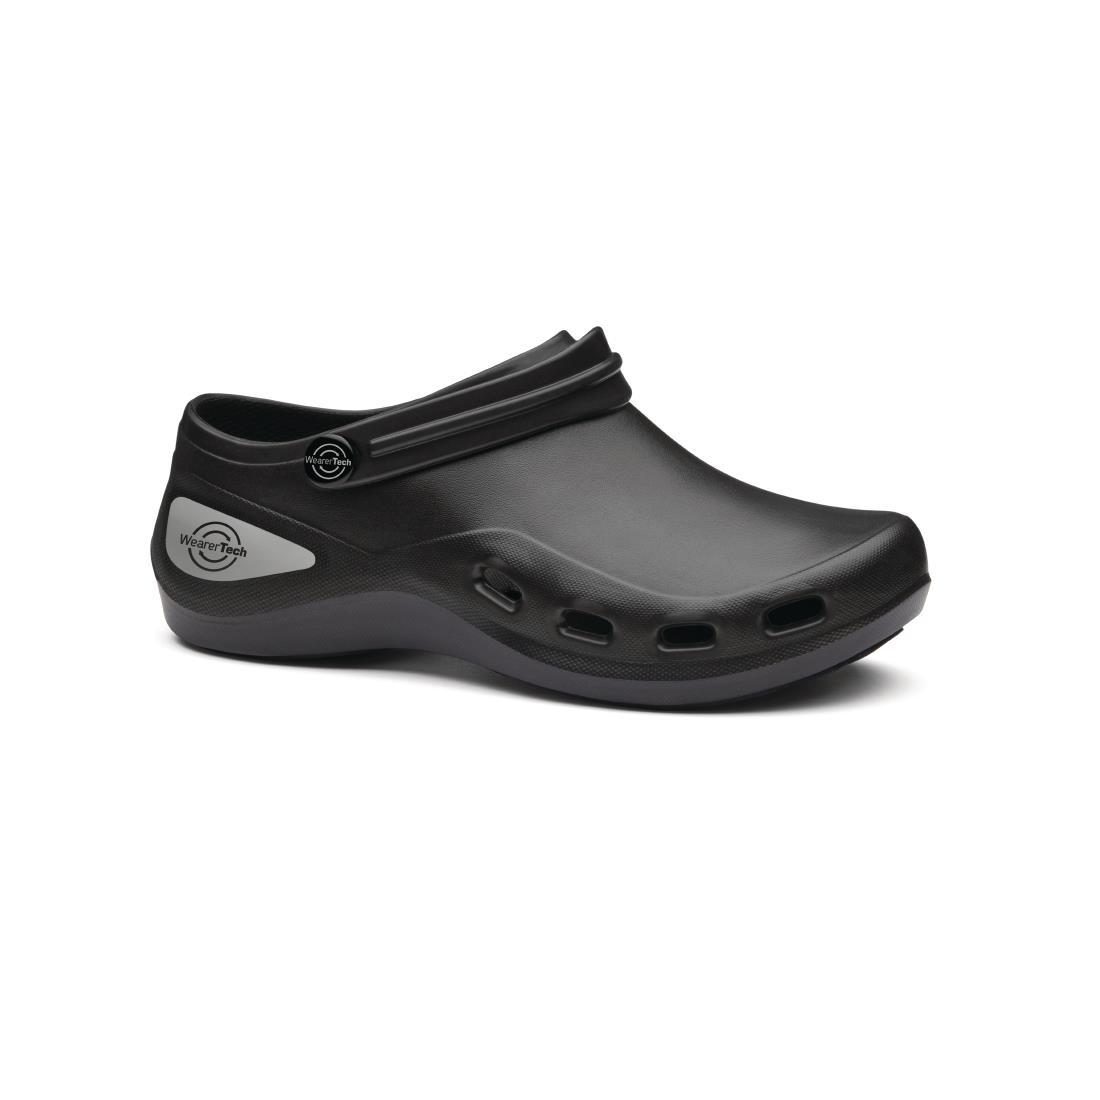 WearerTech Unisex Invigorate Black Safety Shoe Size 11 - BB195-46  - 1